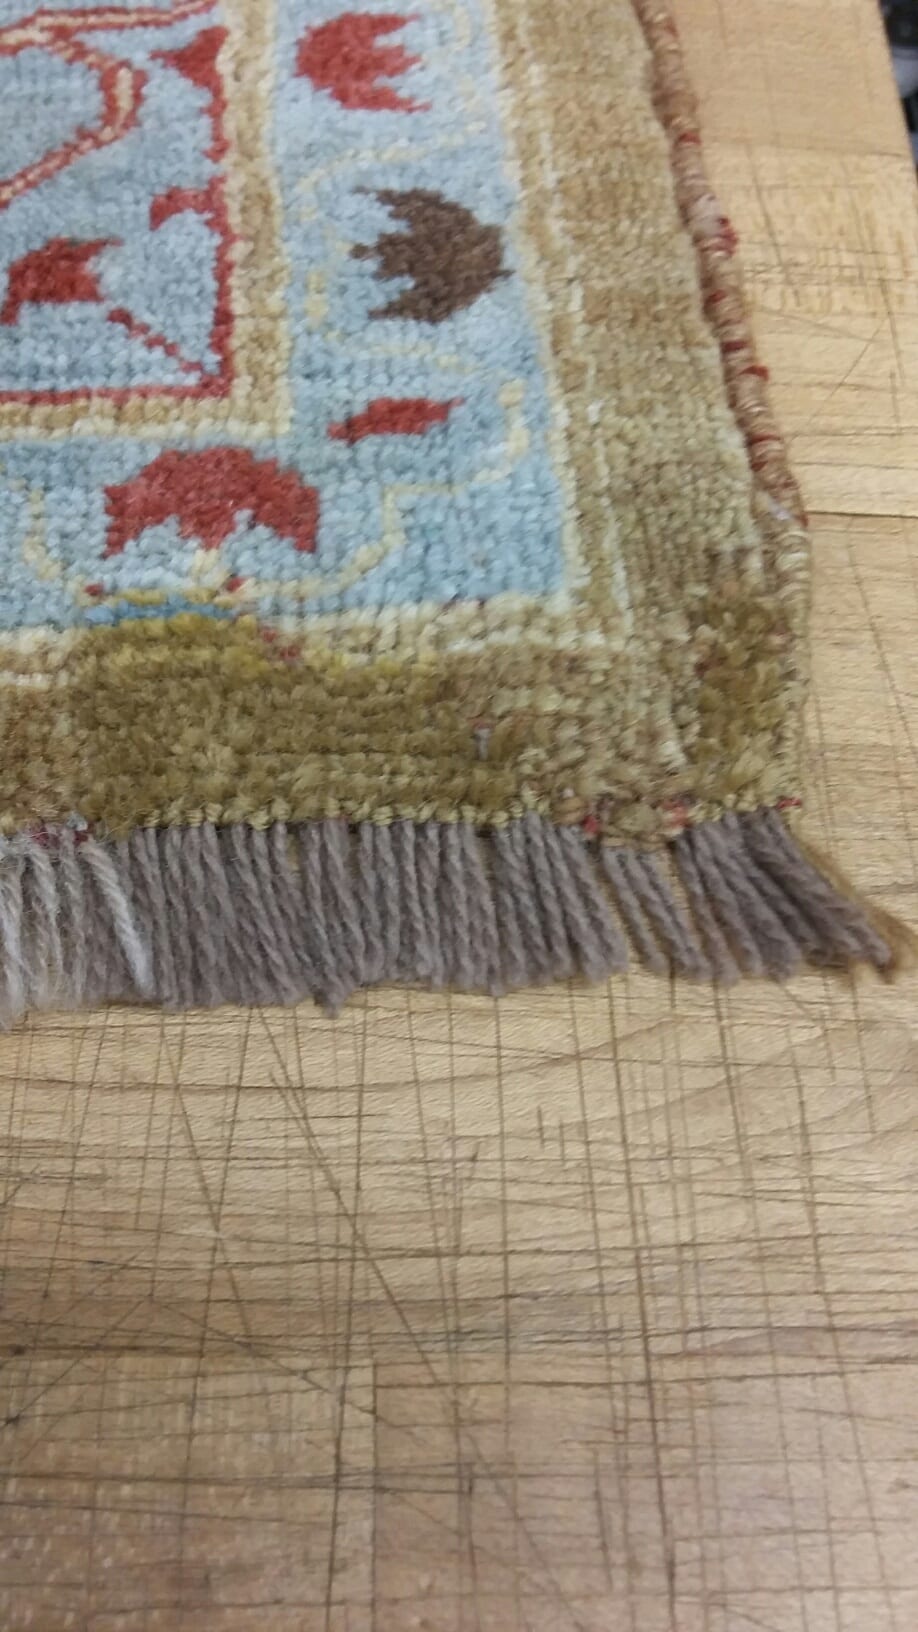 rug repair after